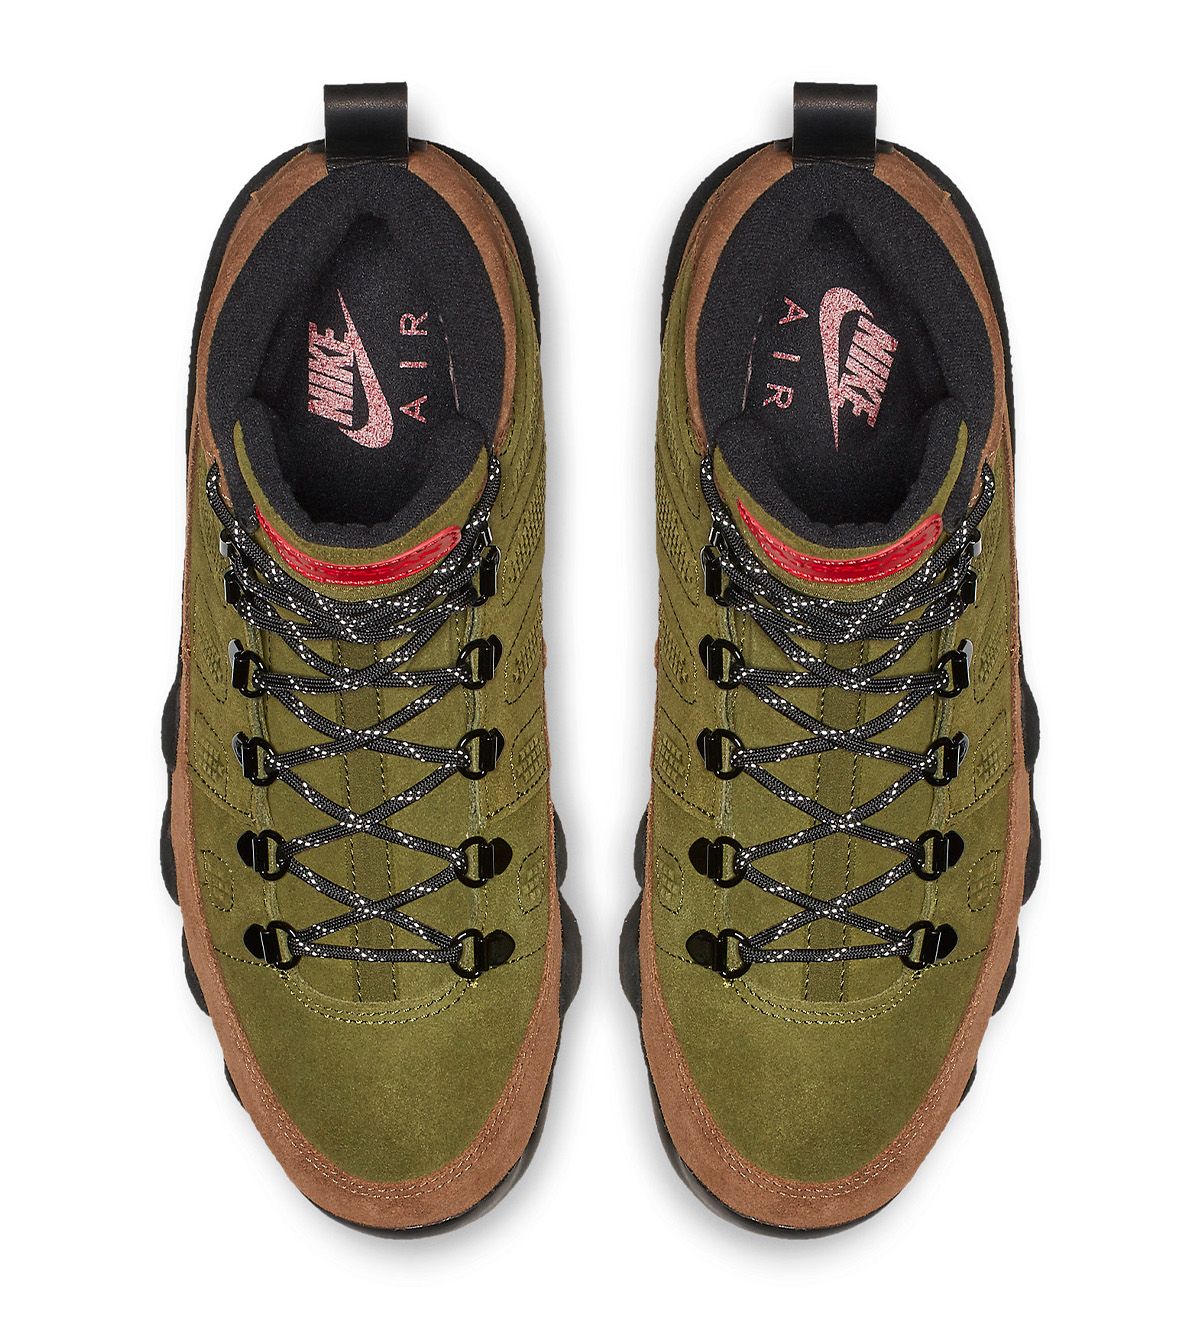 Air Jordan 9 OG Space Jam Release Date - Sneaker Bar Detroit